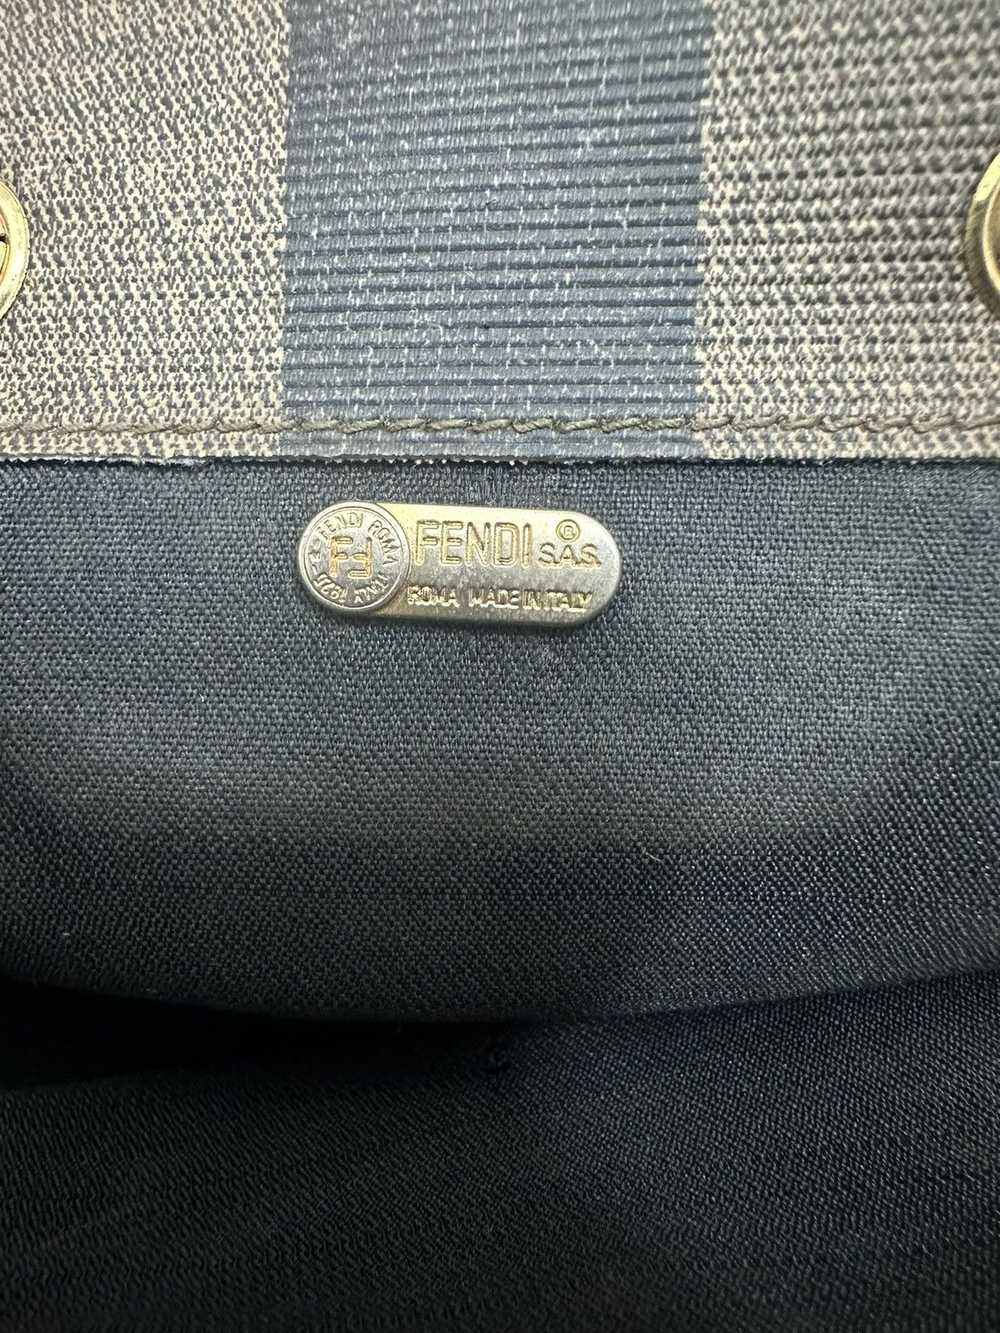 Fendi RARE ‼️ Fendi Rucksack Leather Backpack - image 12